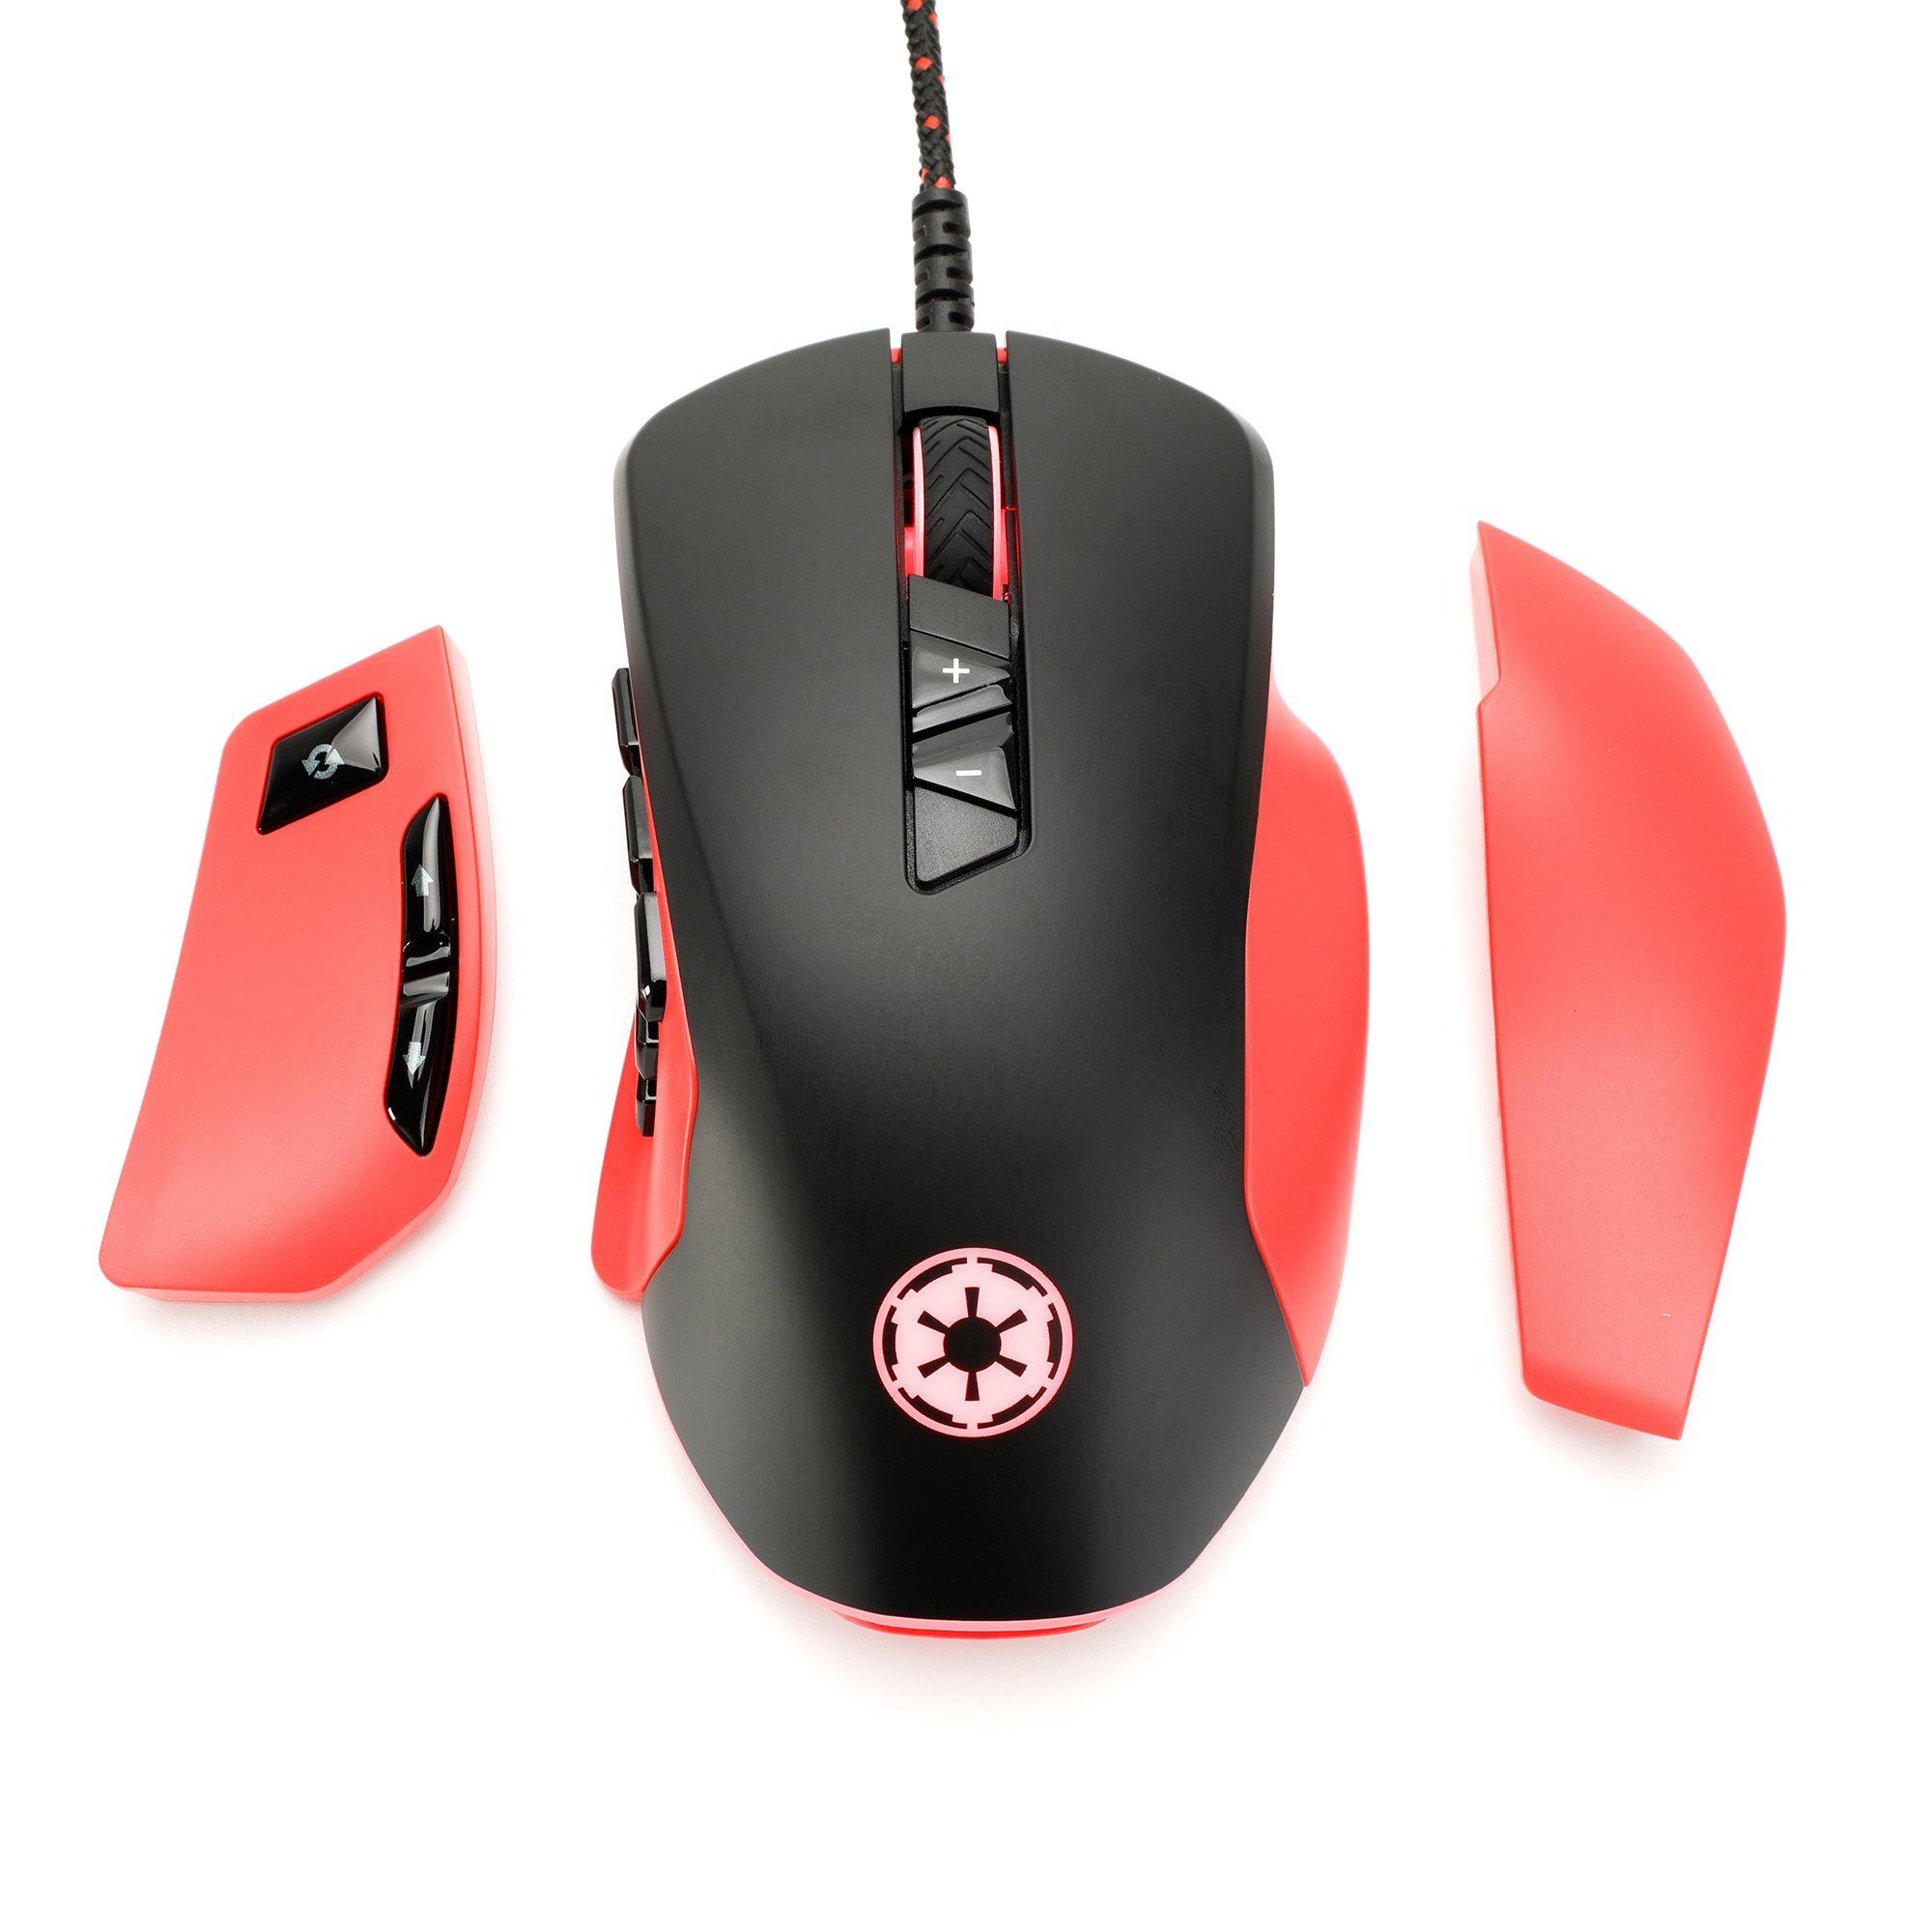 Geeknet Star Darth Vader Wired MMO RGB Gaming Mouse GameStop Exclusive | GameStop